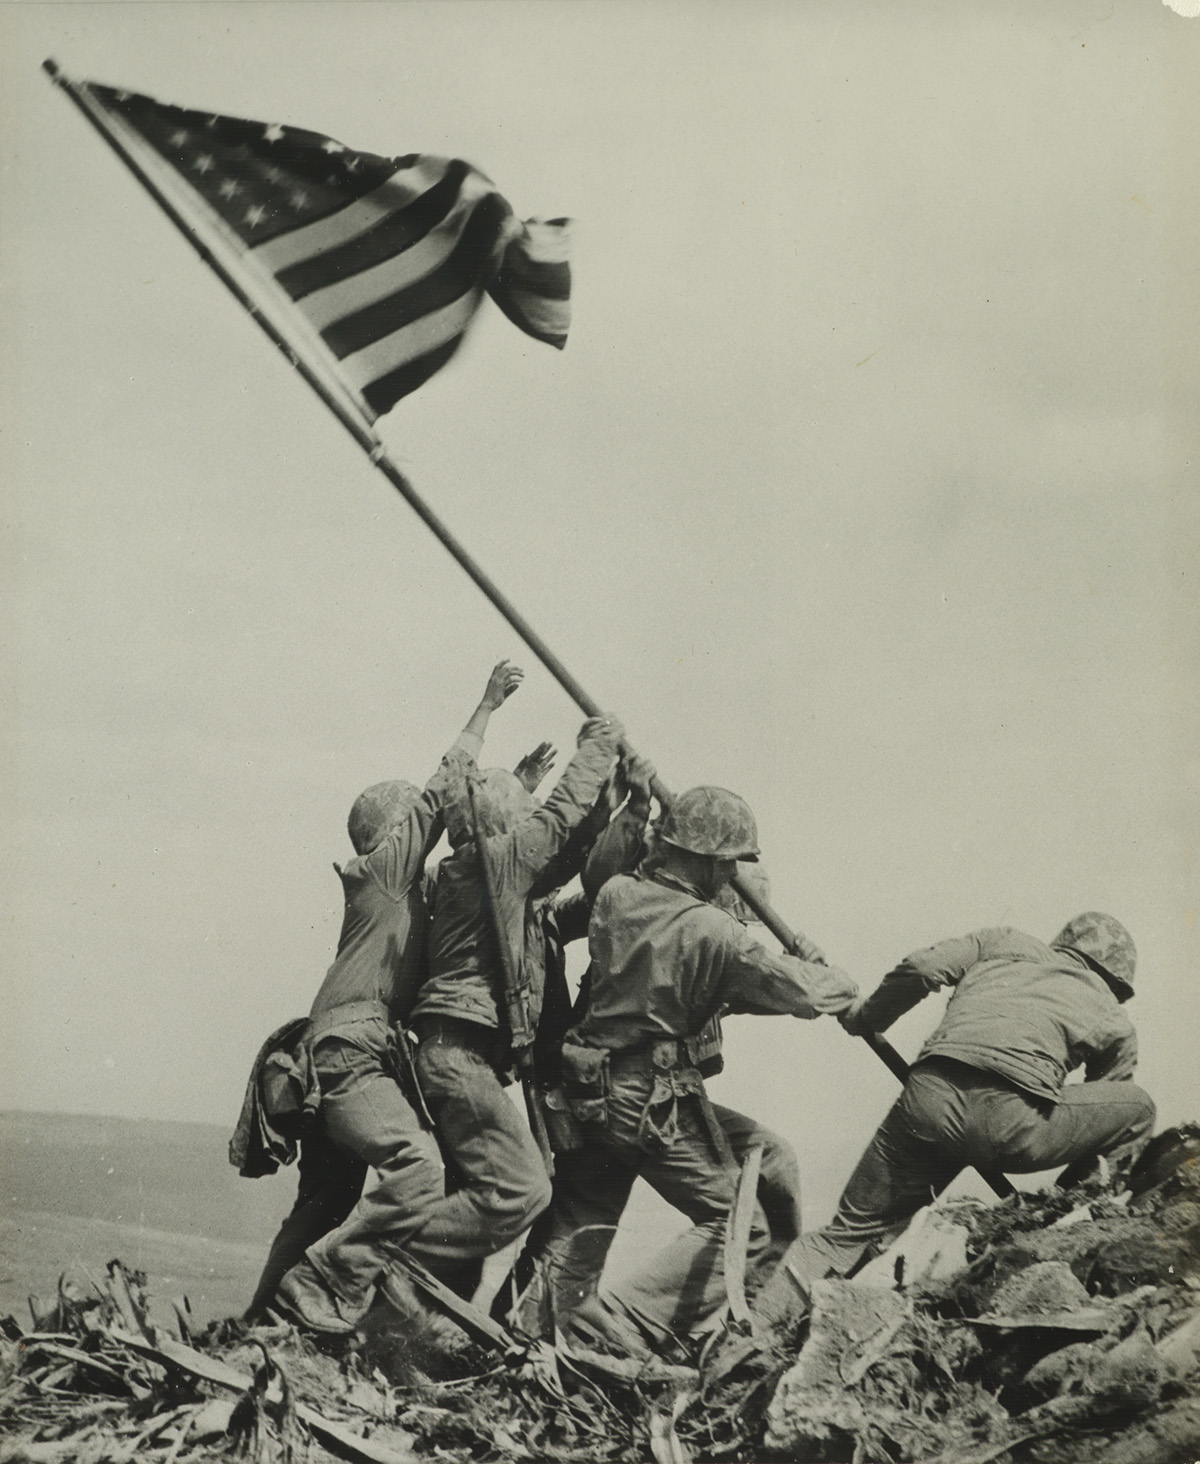 JOE ROSENTHAL (1911-2006) Raising the Flag on Iwo Jima.